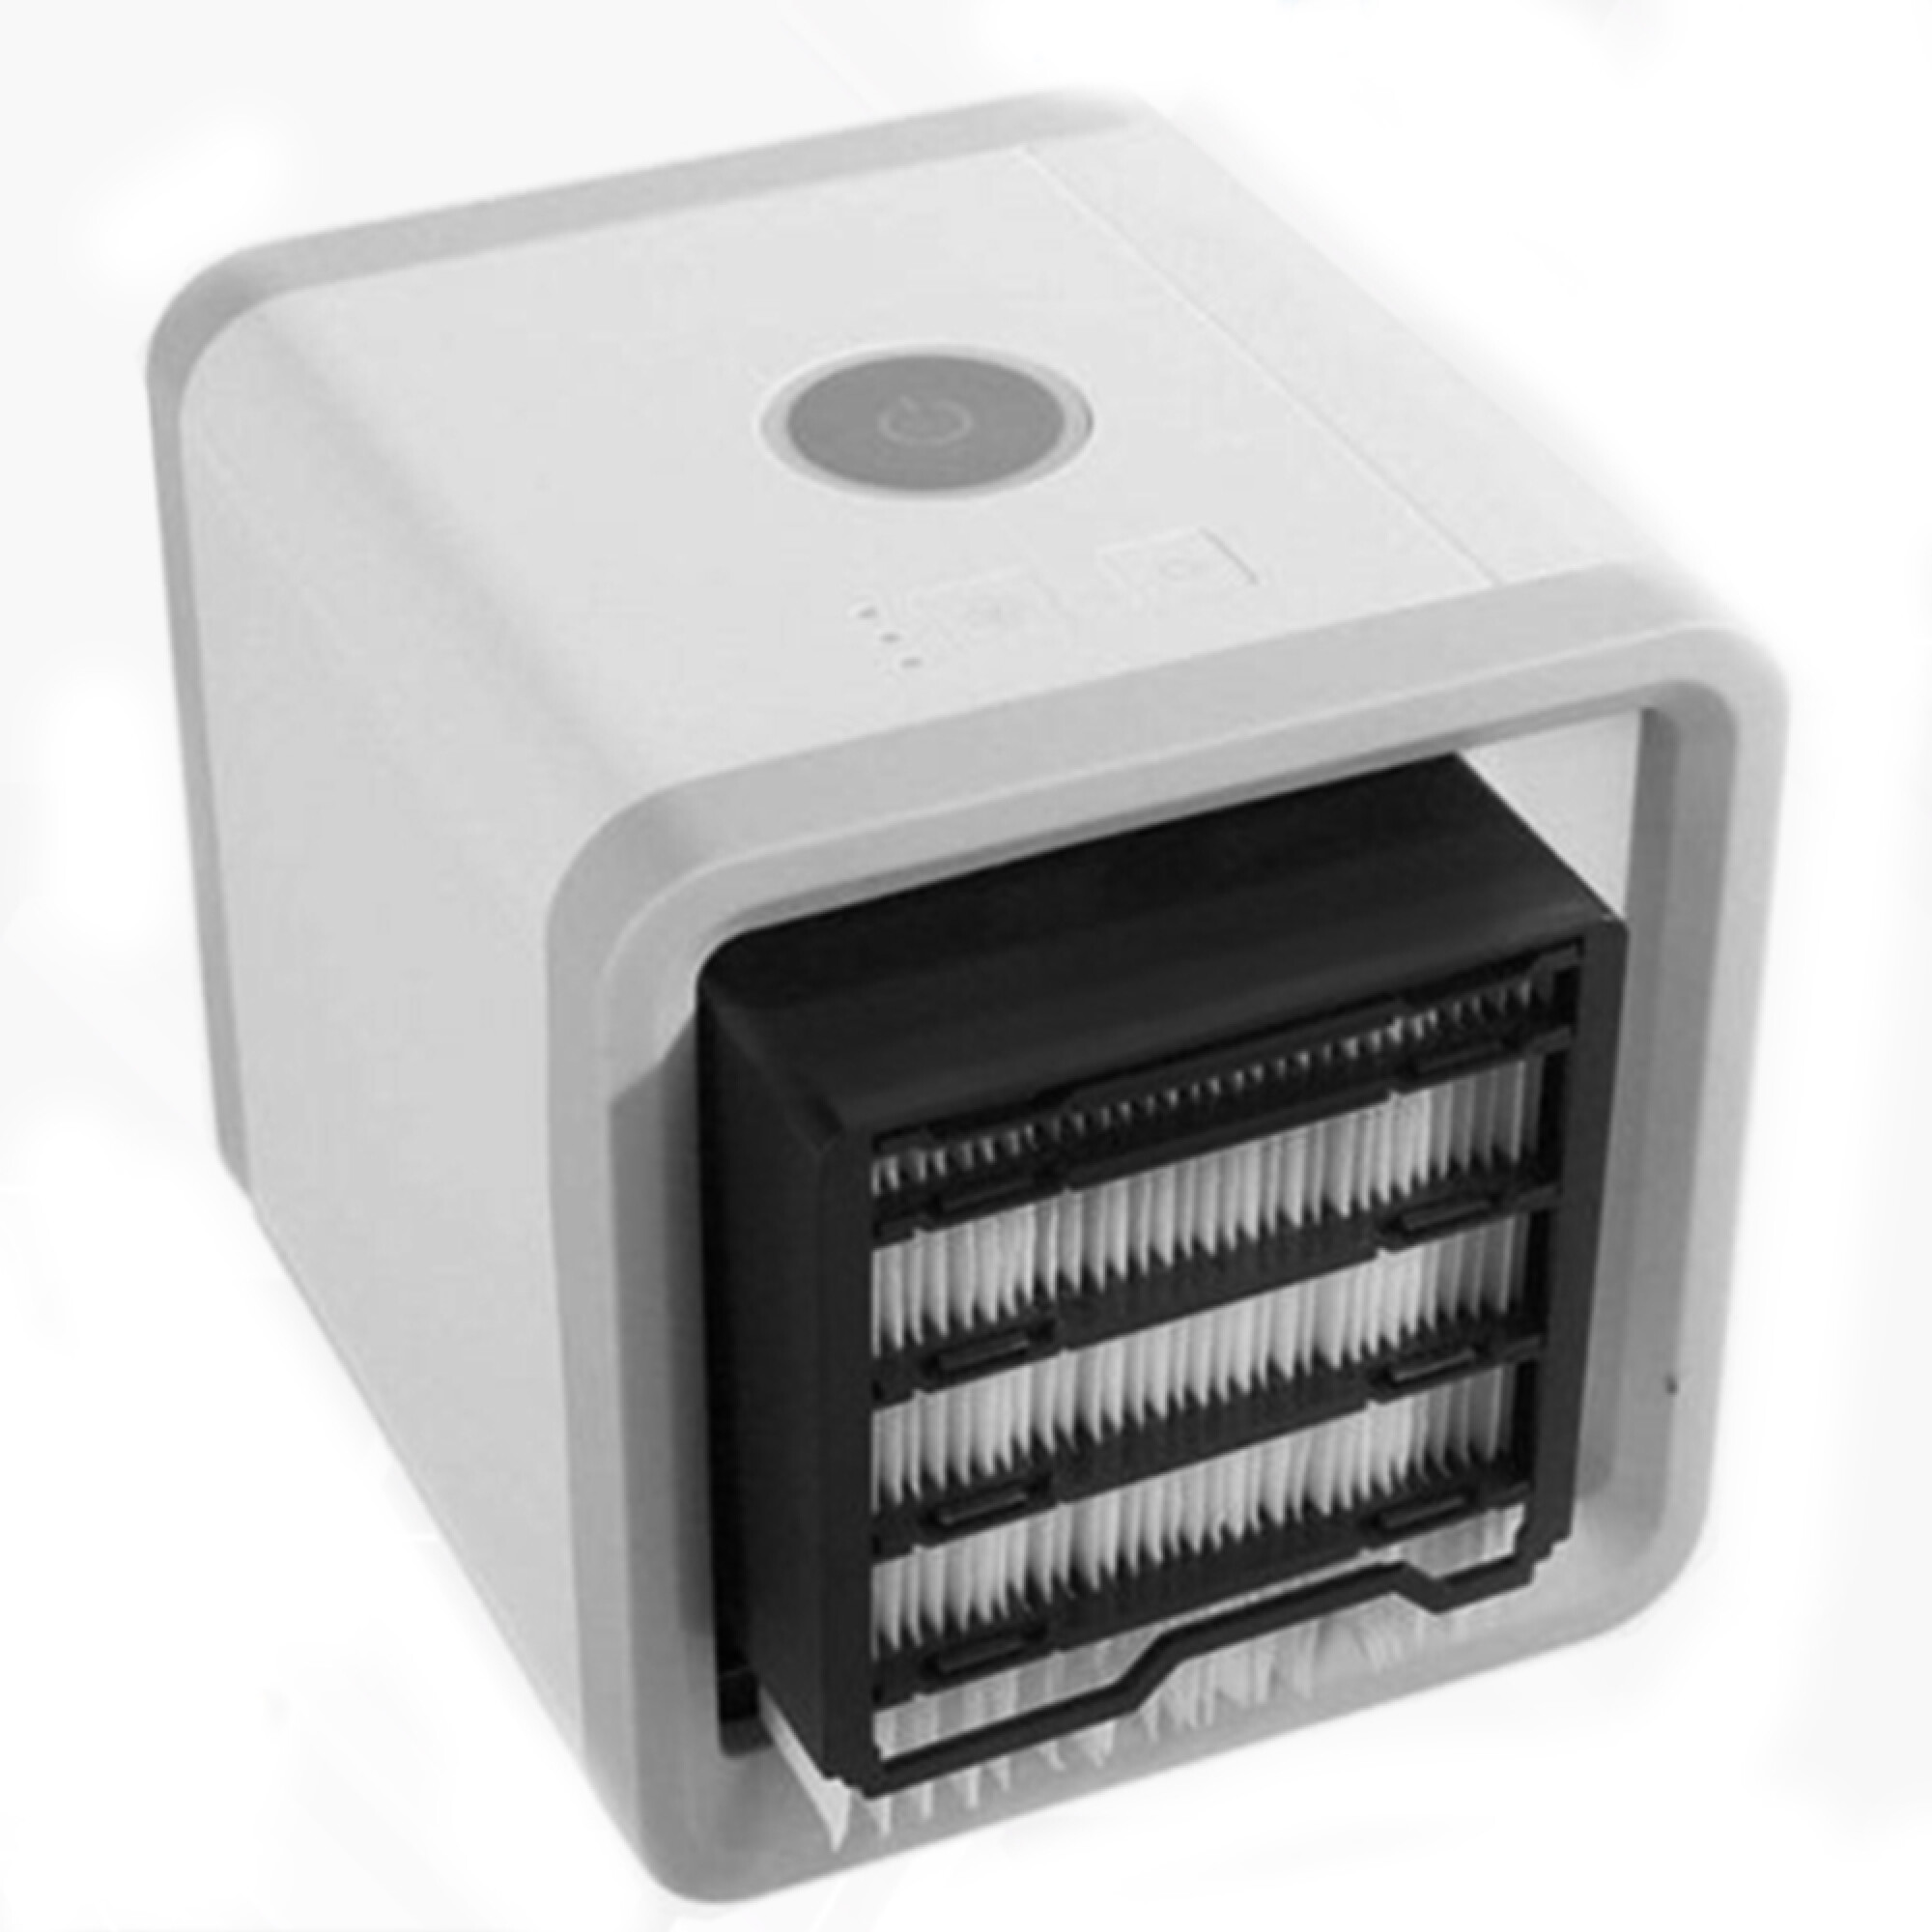 Shenrongtong Filtros de Repuesto de Aire para Arctics Cooler Repuesto de Filtro de Mini Enfriador de Aire Papel de Filtro de Repuesto Duradero para Filtro de Enfriador de Aire Arctic USB 